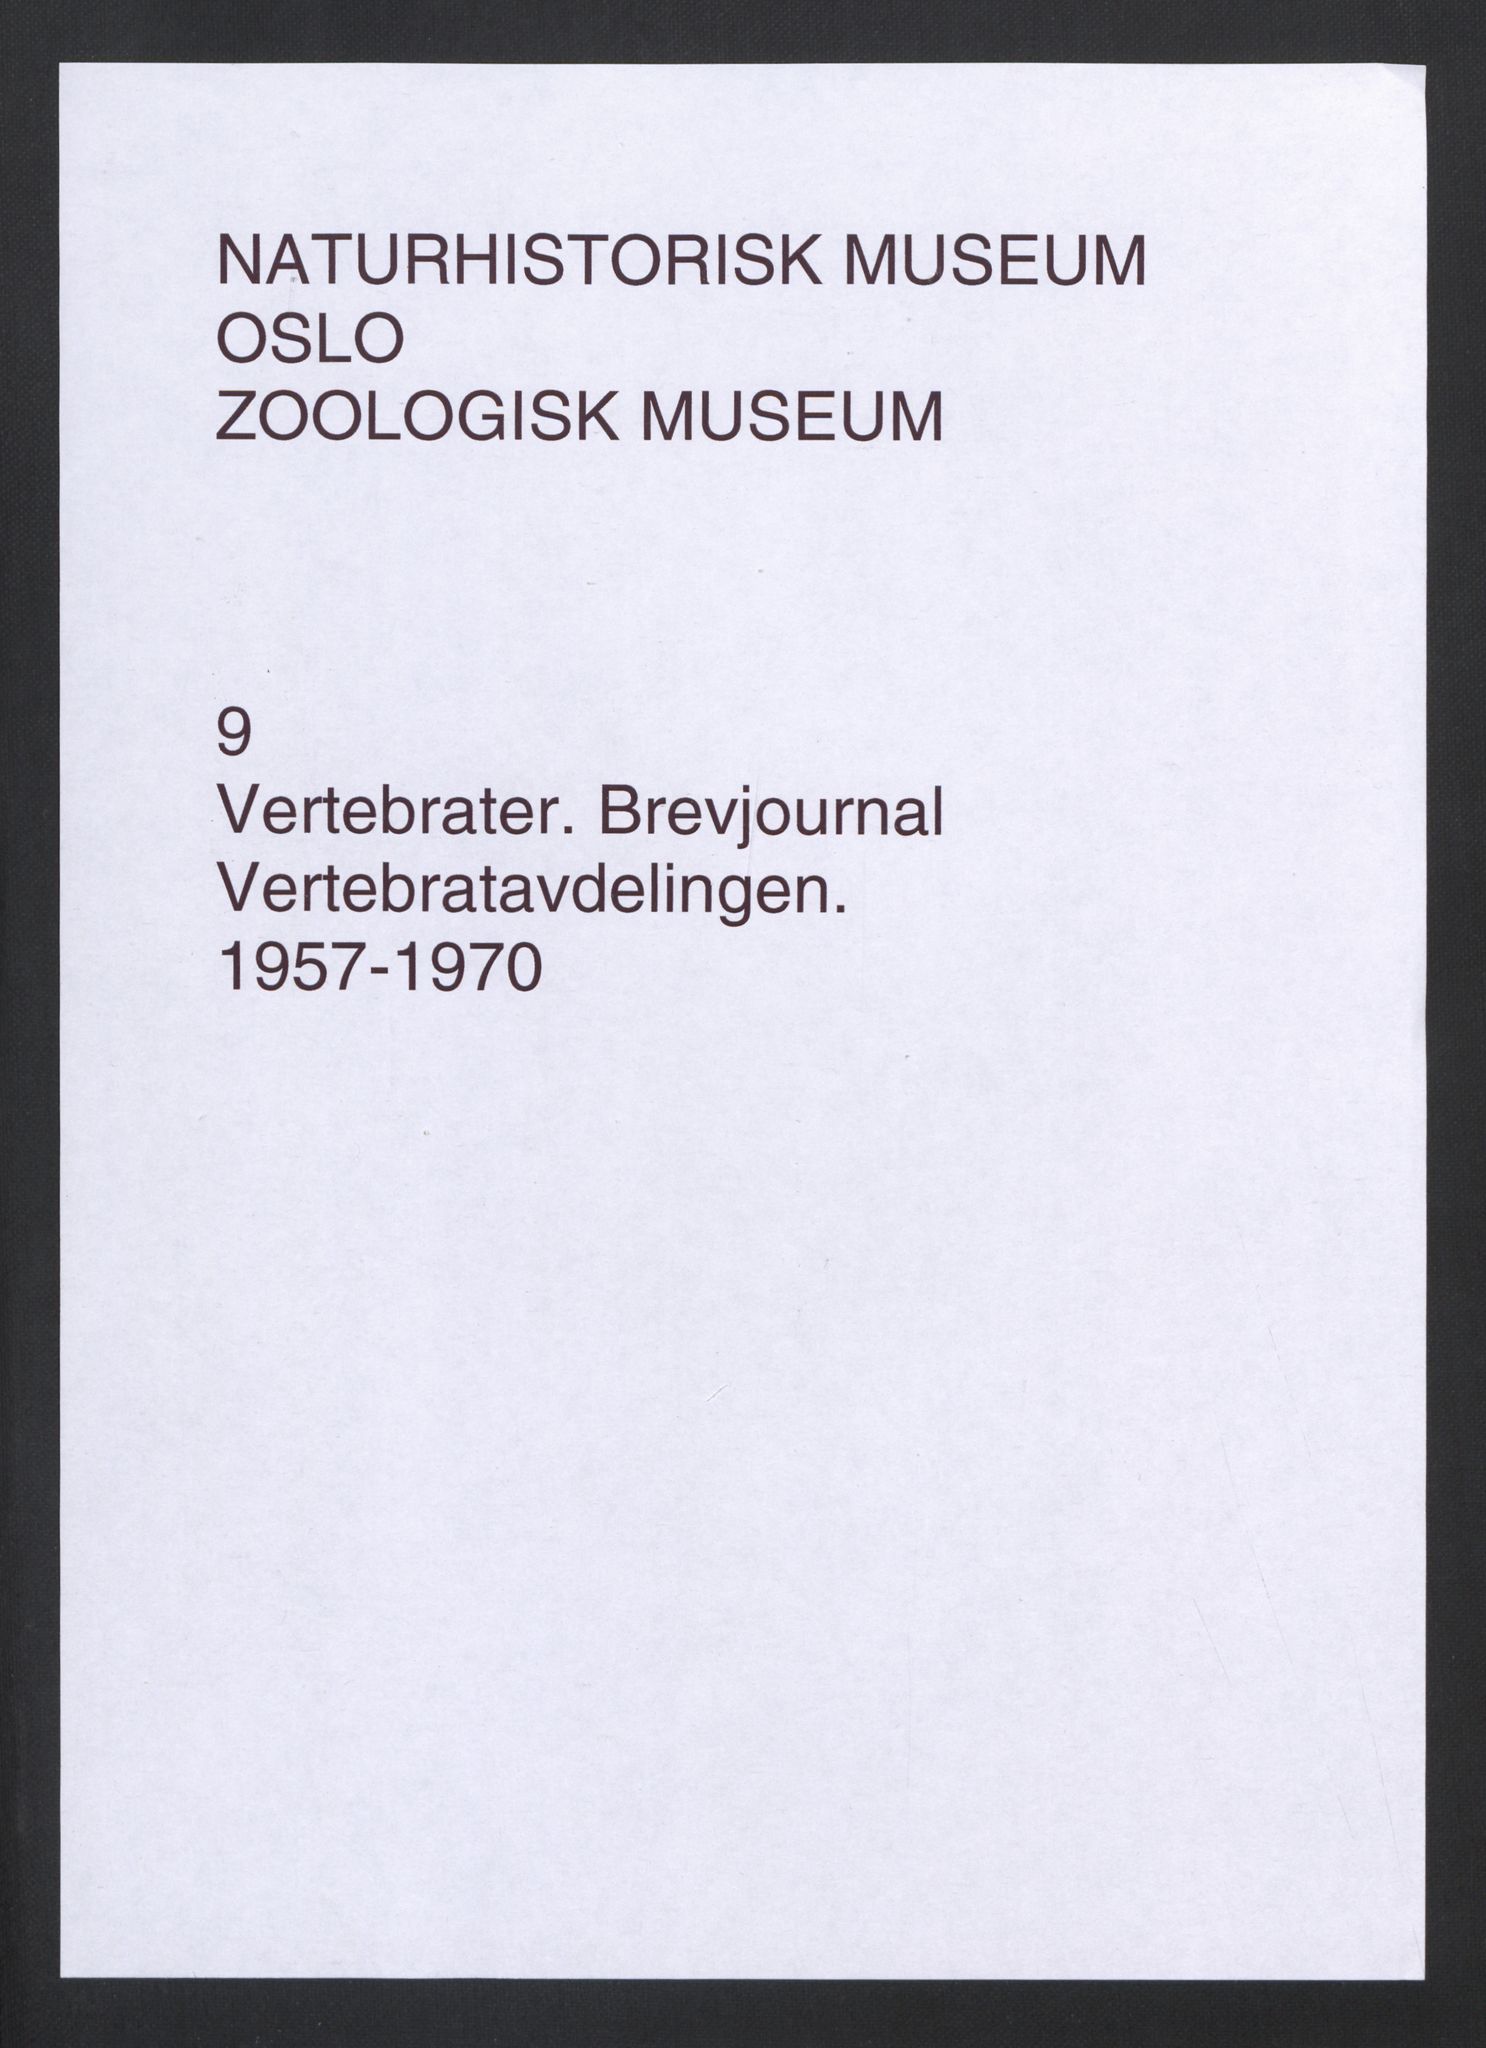 Naturhistorisk museum (Oslo), NHMO/-/5, 1957-1970